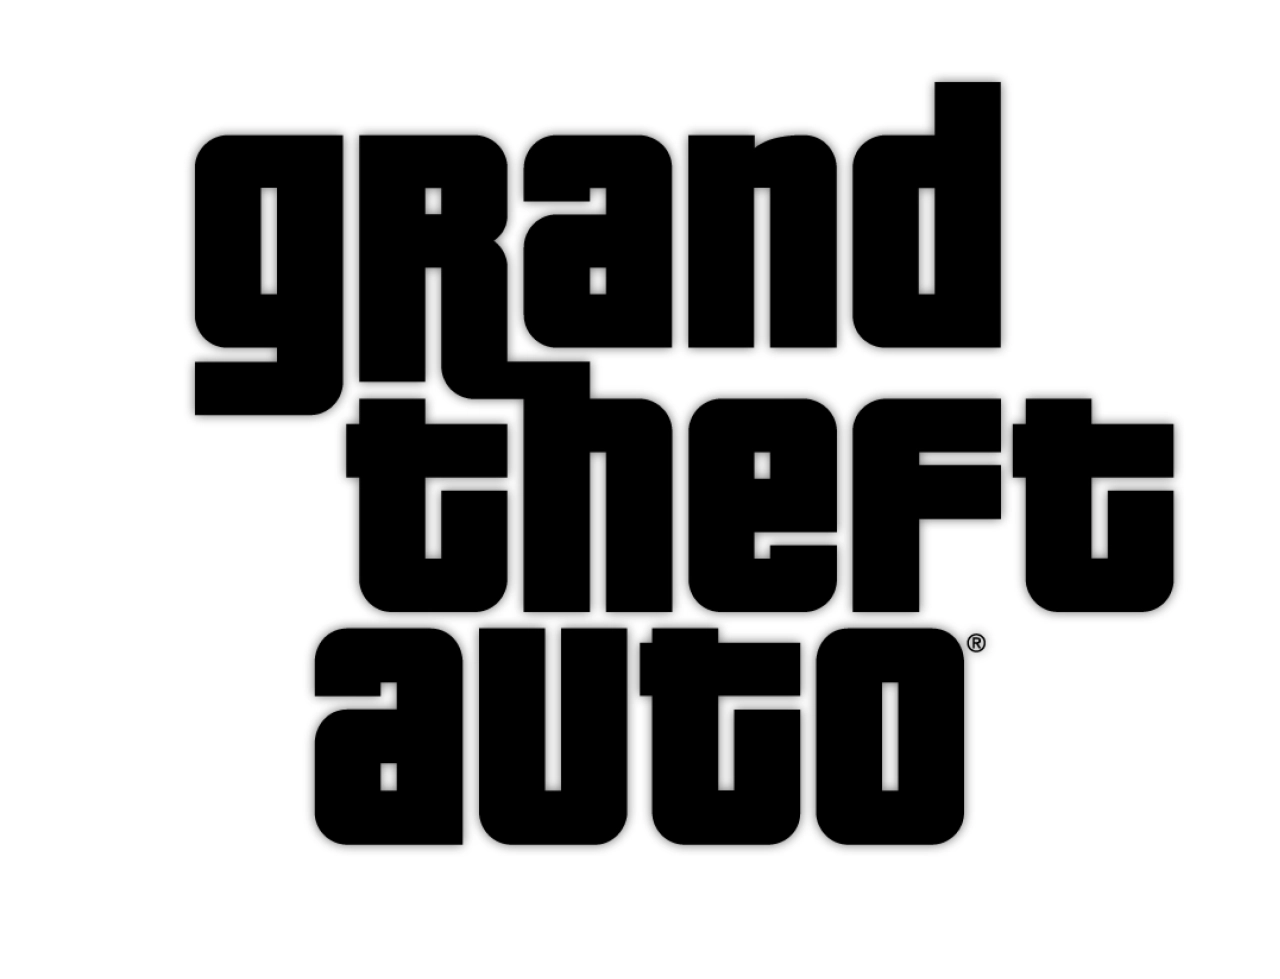 Official Grand Theft Auto Logo (Black On White)